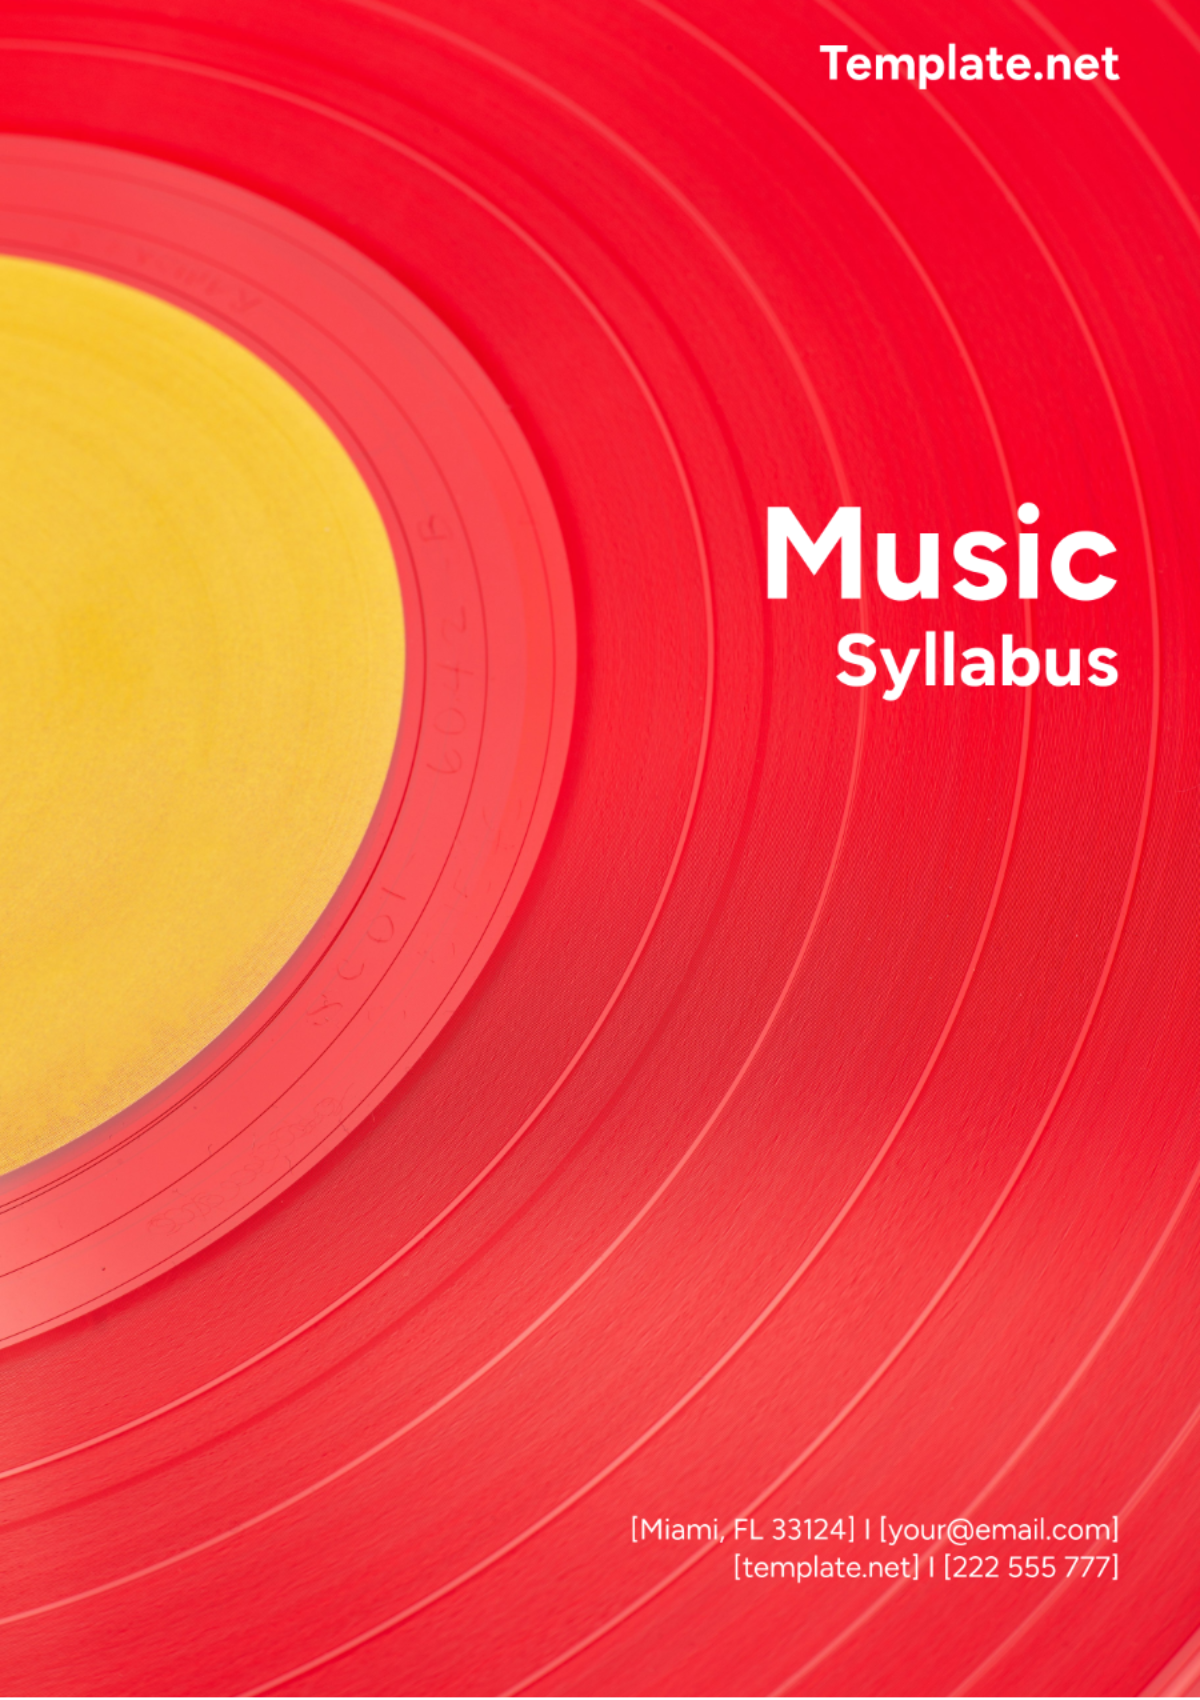 Music Syllabus Template